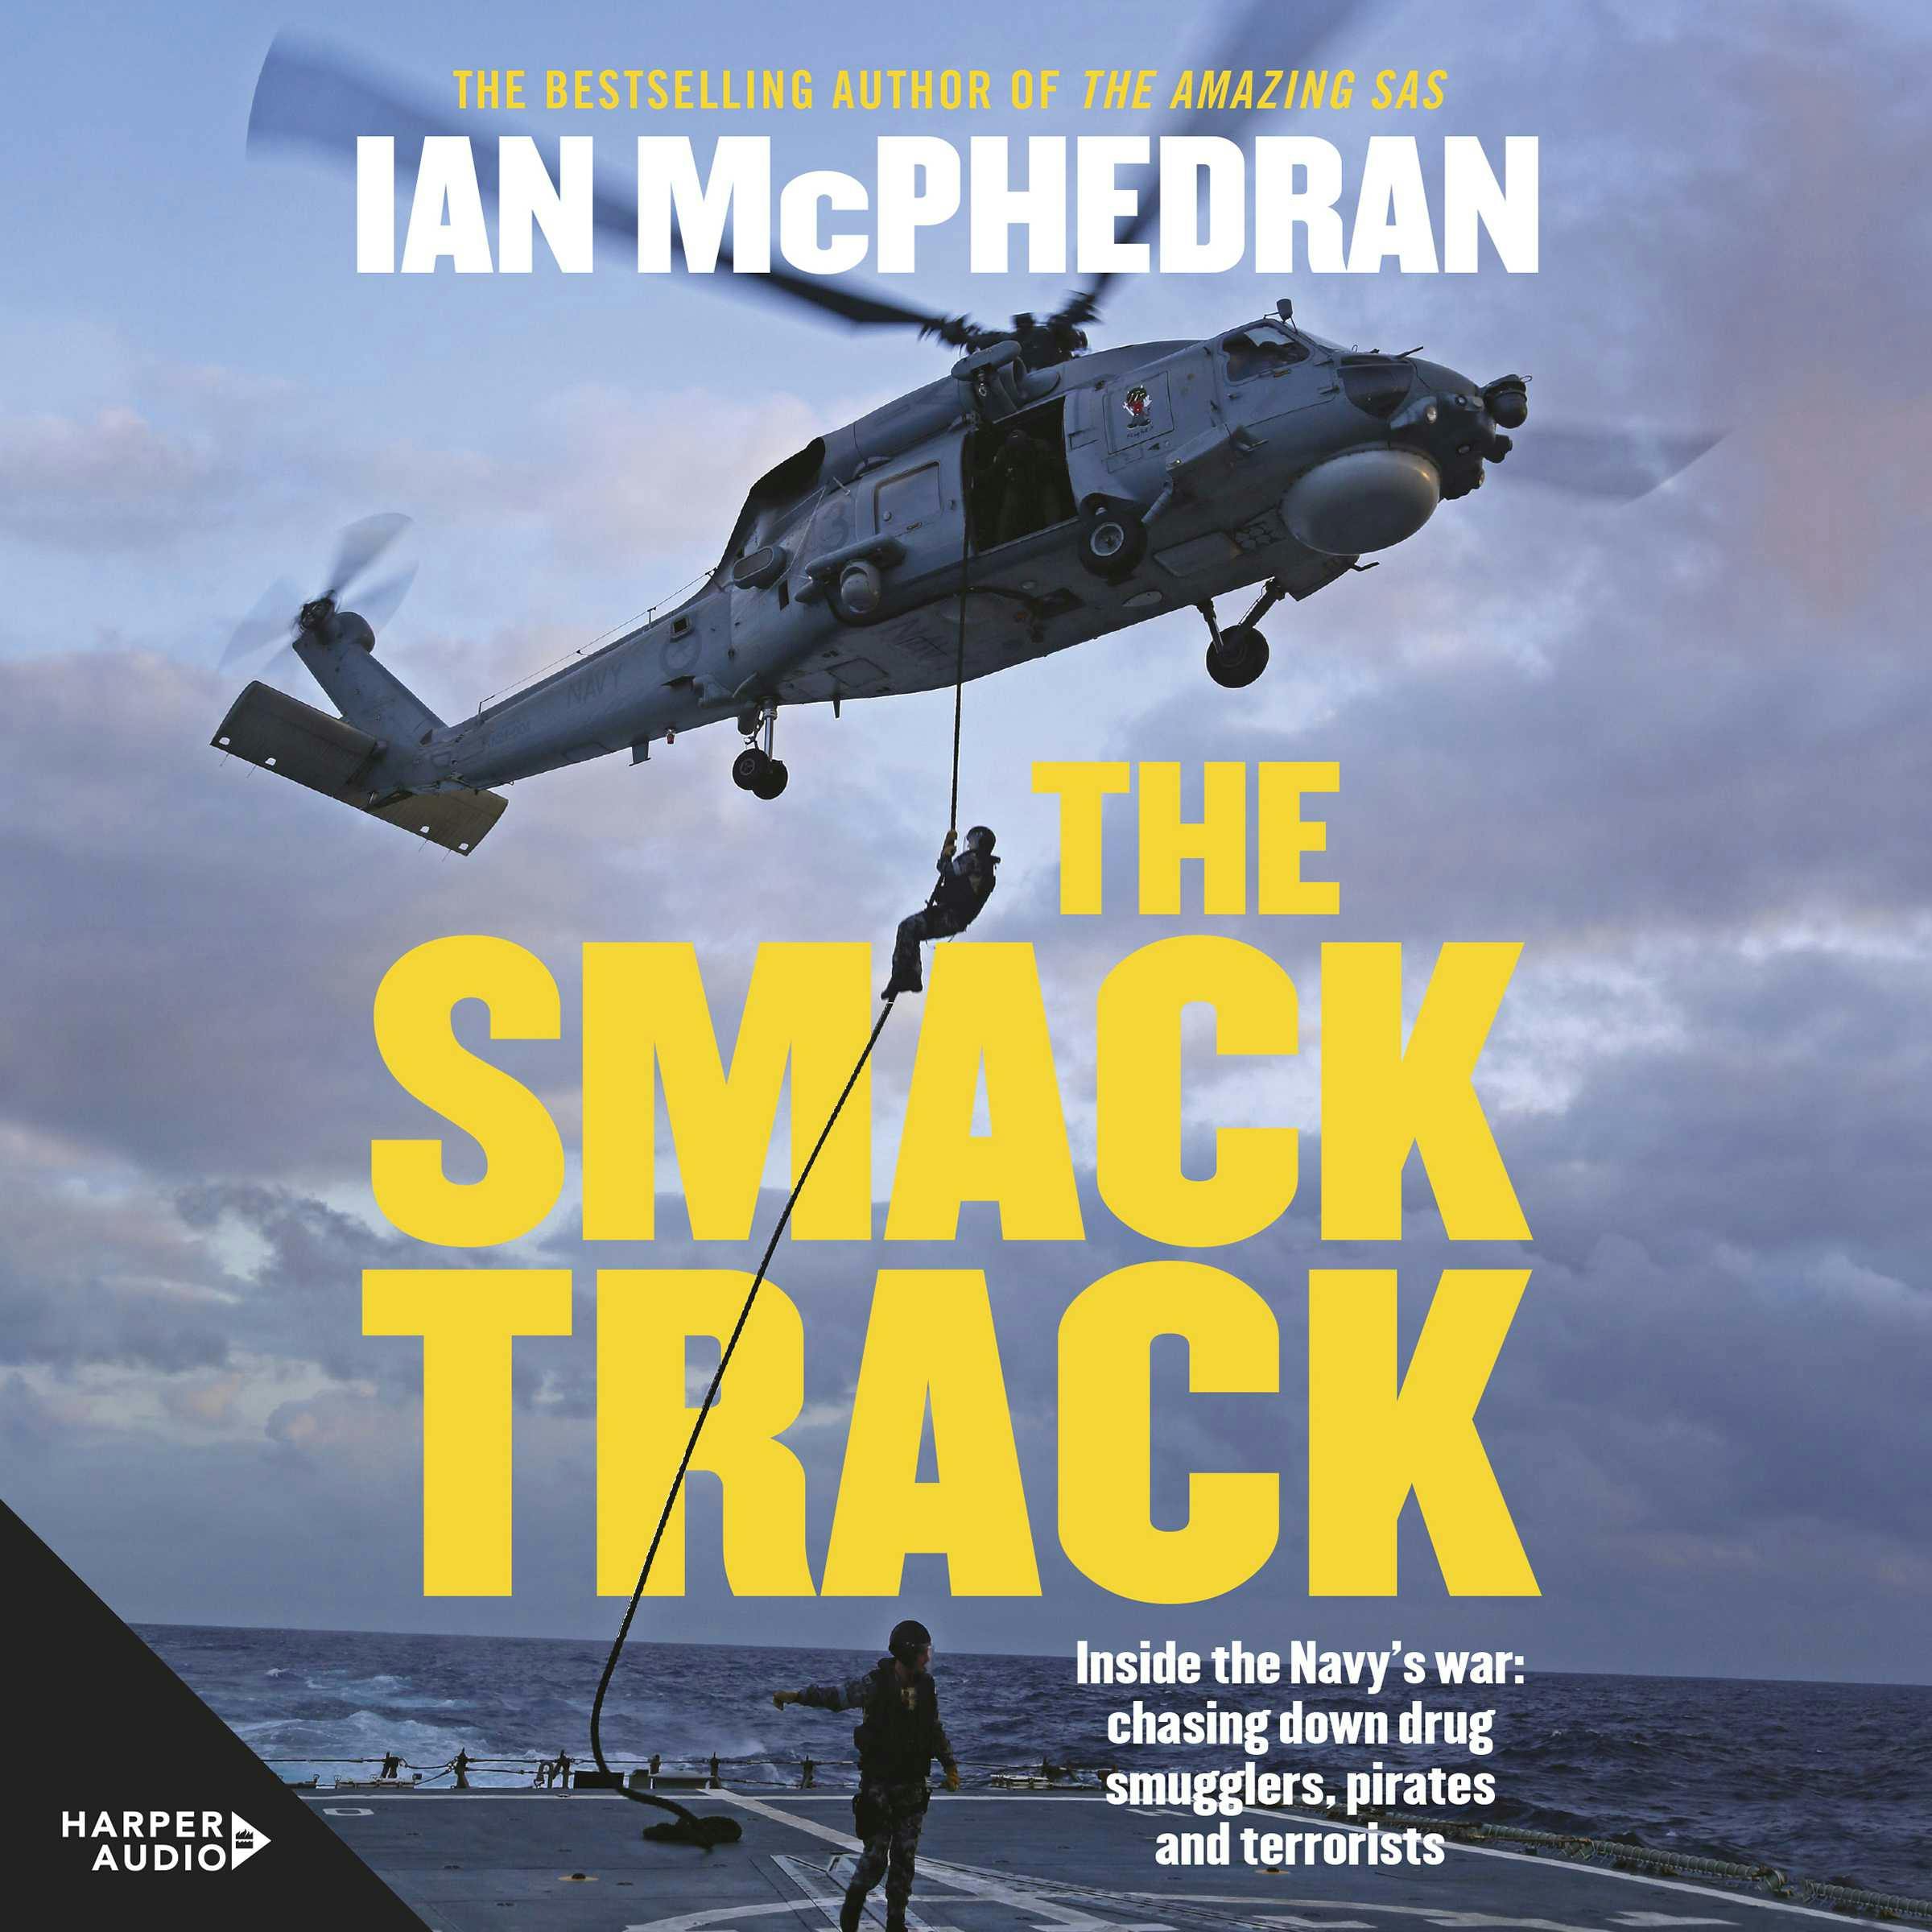 The Smack Track - Ian McPhedran